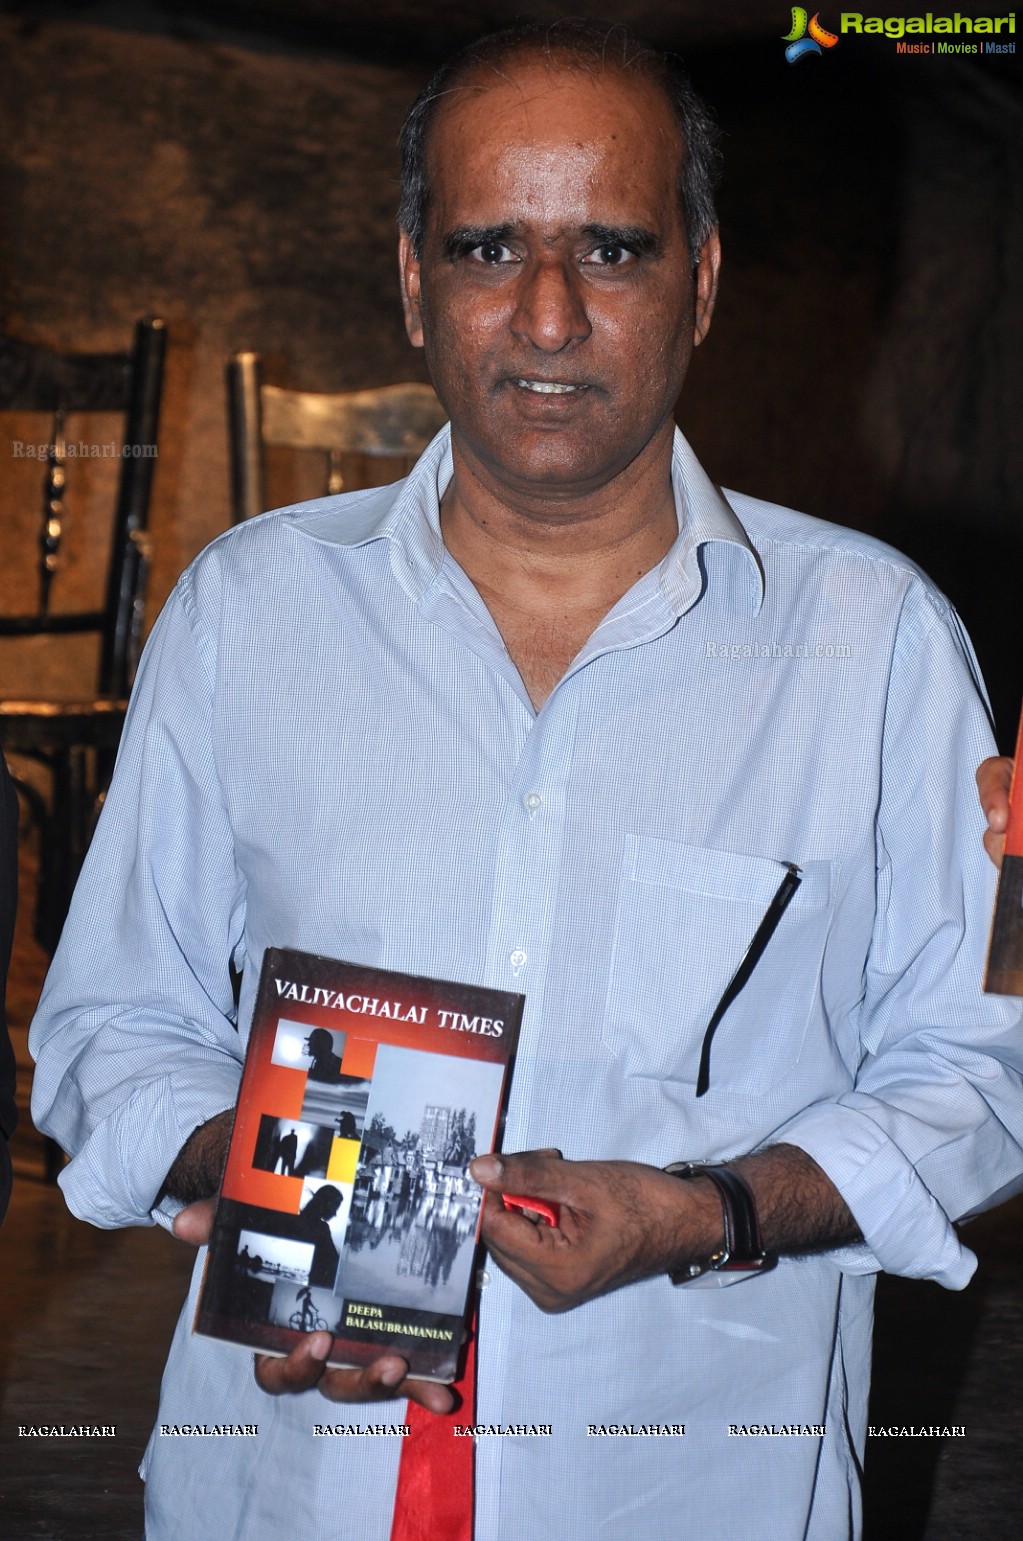 Valiyachalai Times Book Launch